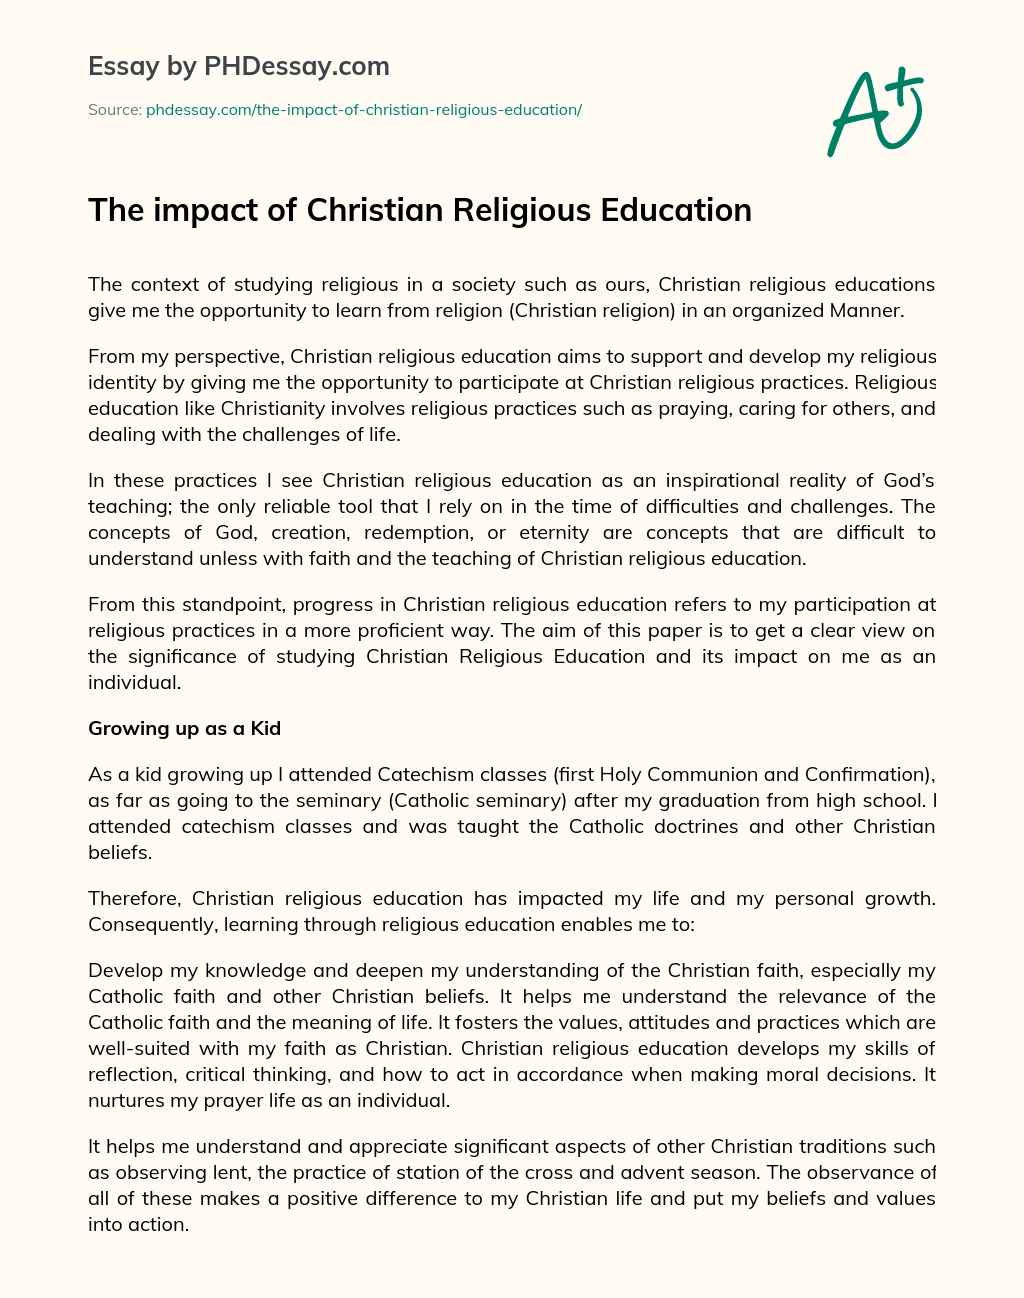 The impact of Christian Religious Education - PHDessay.com